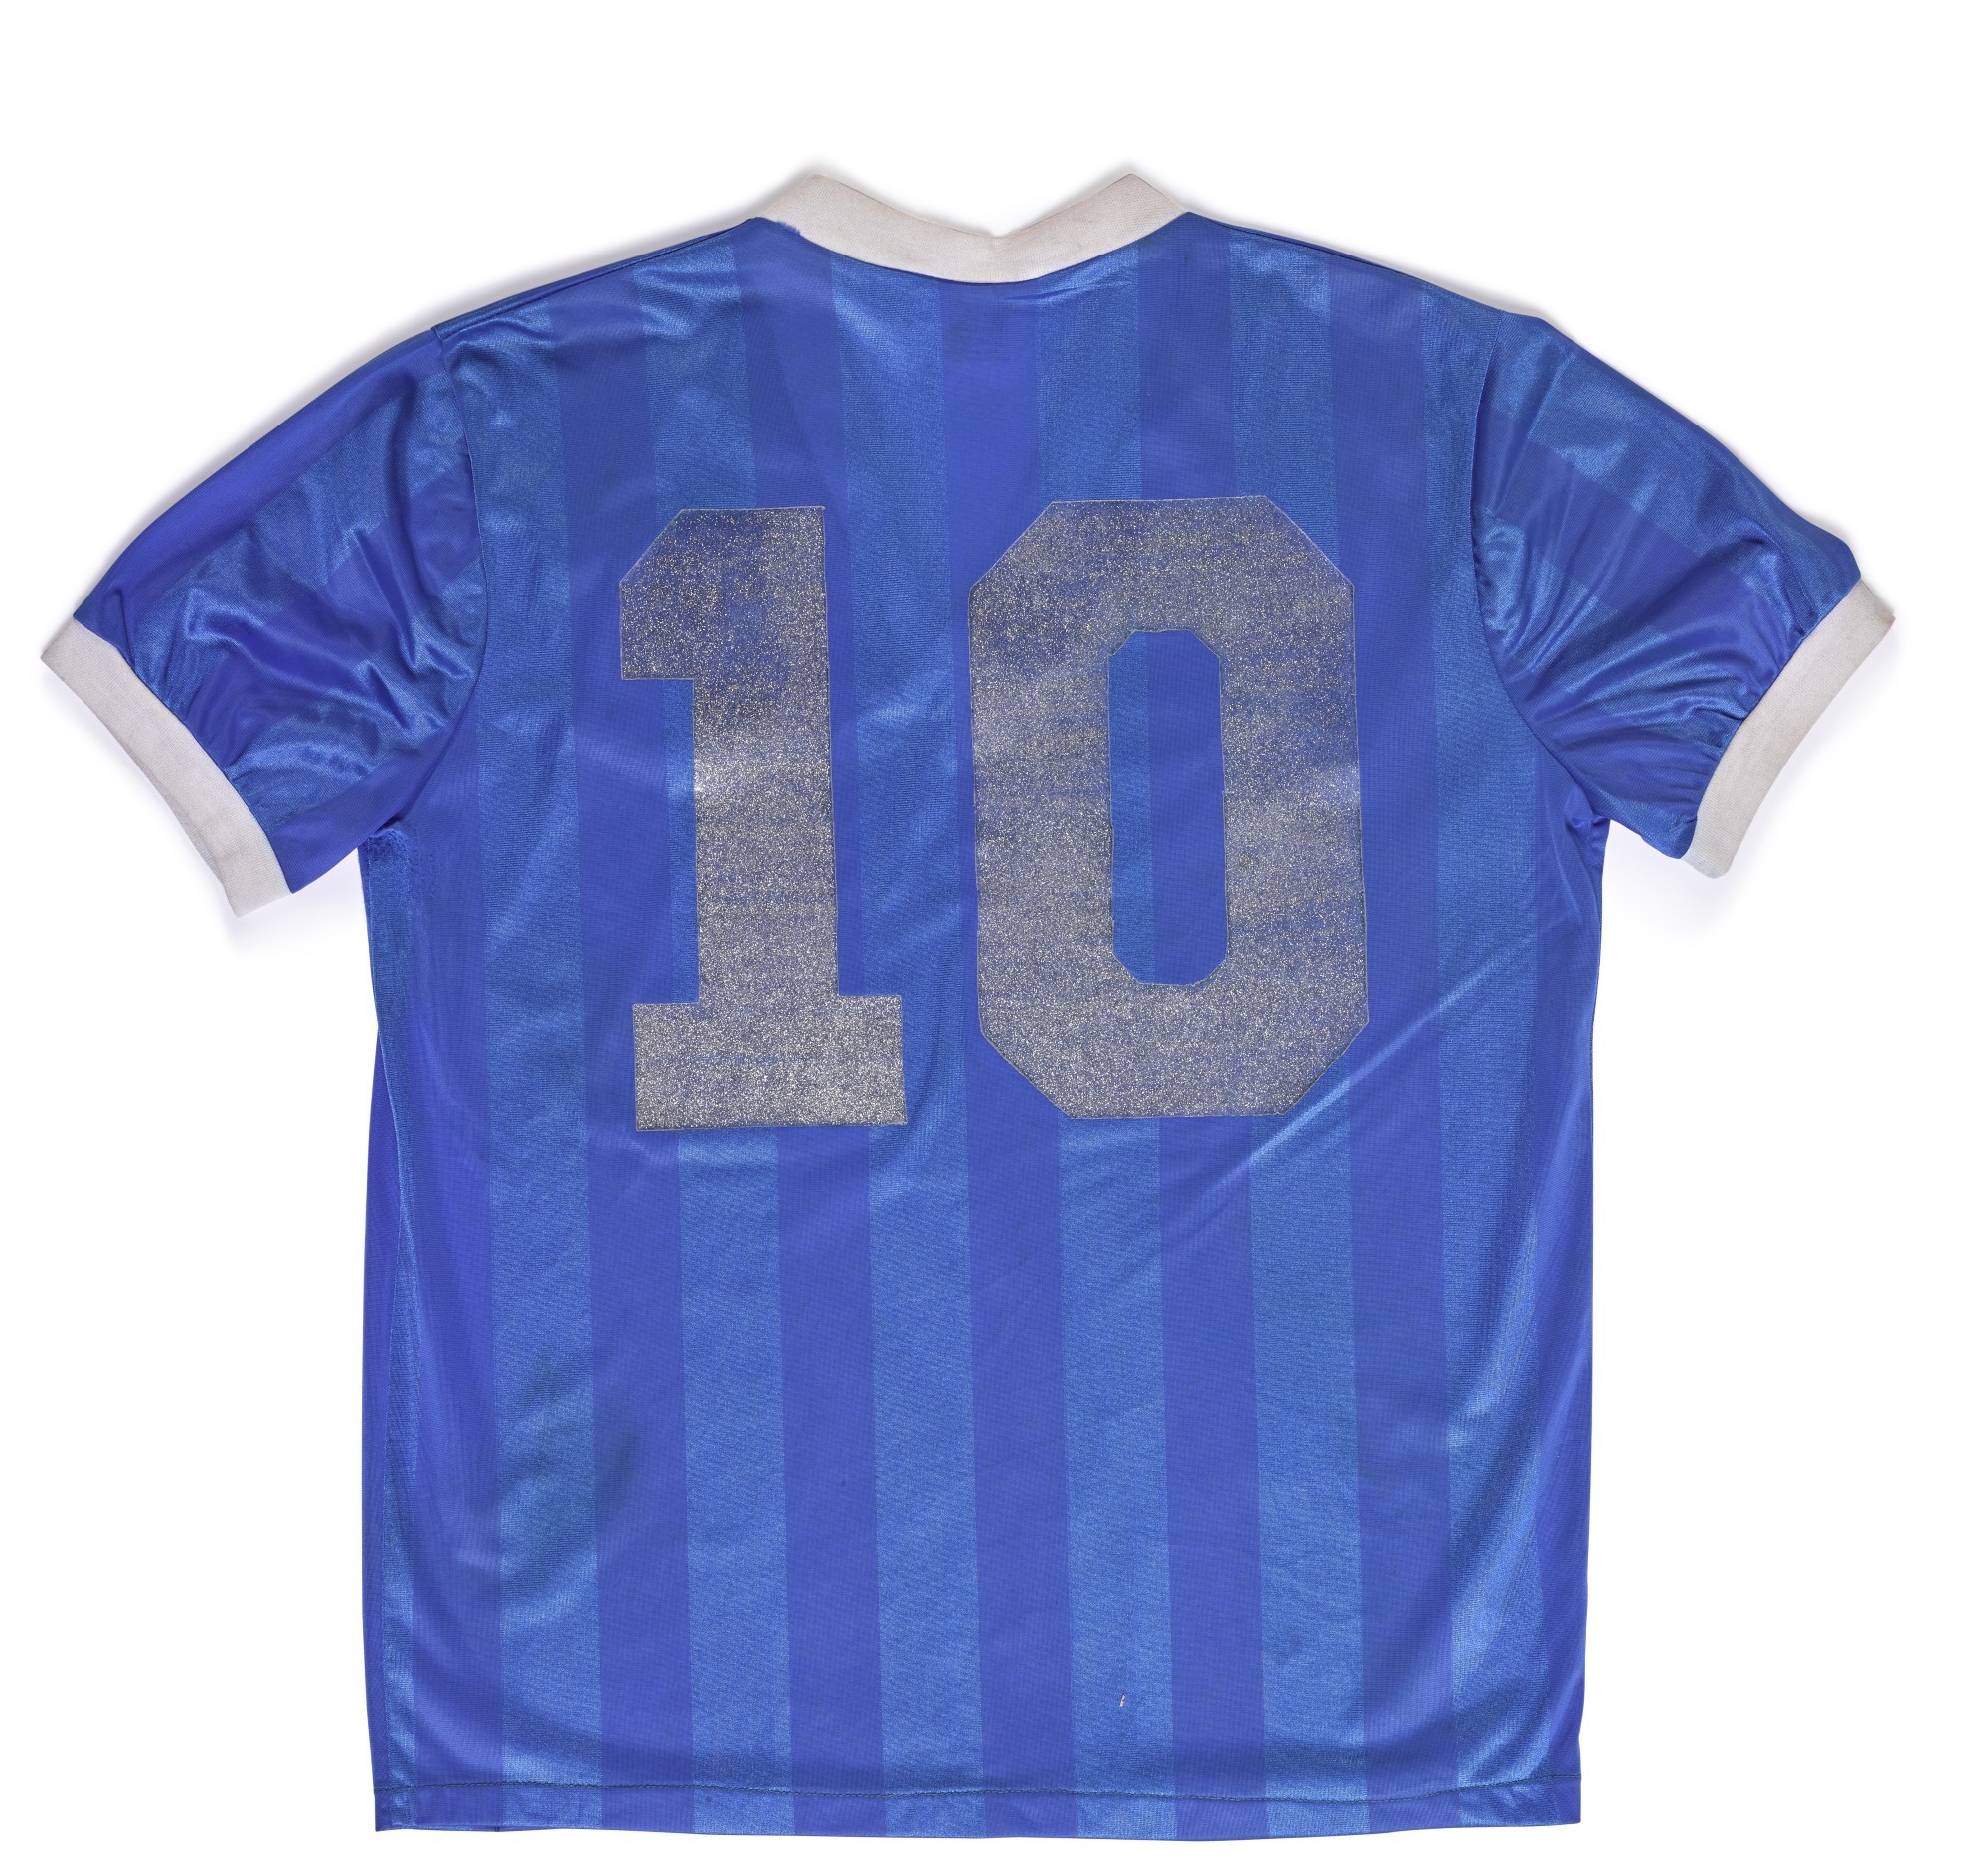 Diego Maradona ‘Hand Of God’ & ‘Goal Of The Century’ World Cup Match Worn Shirt